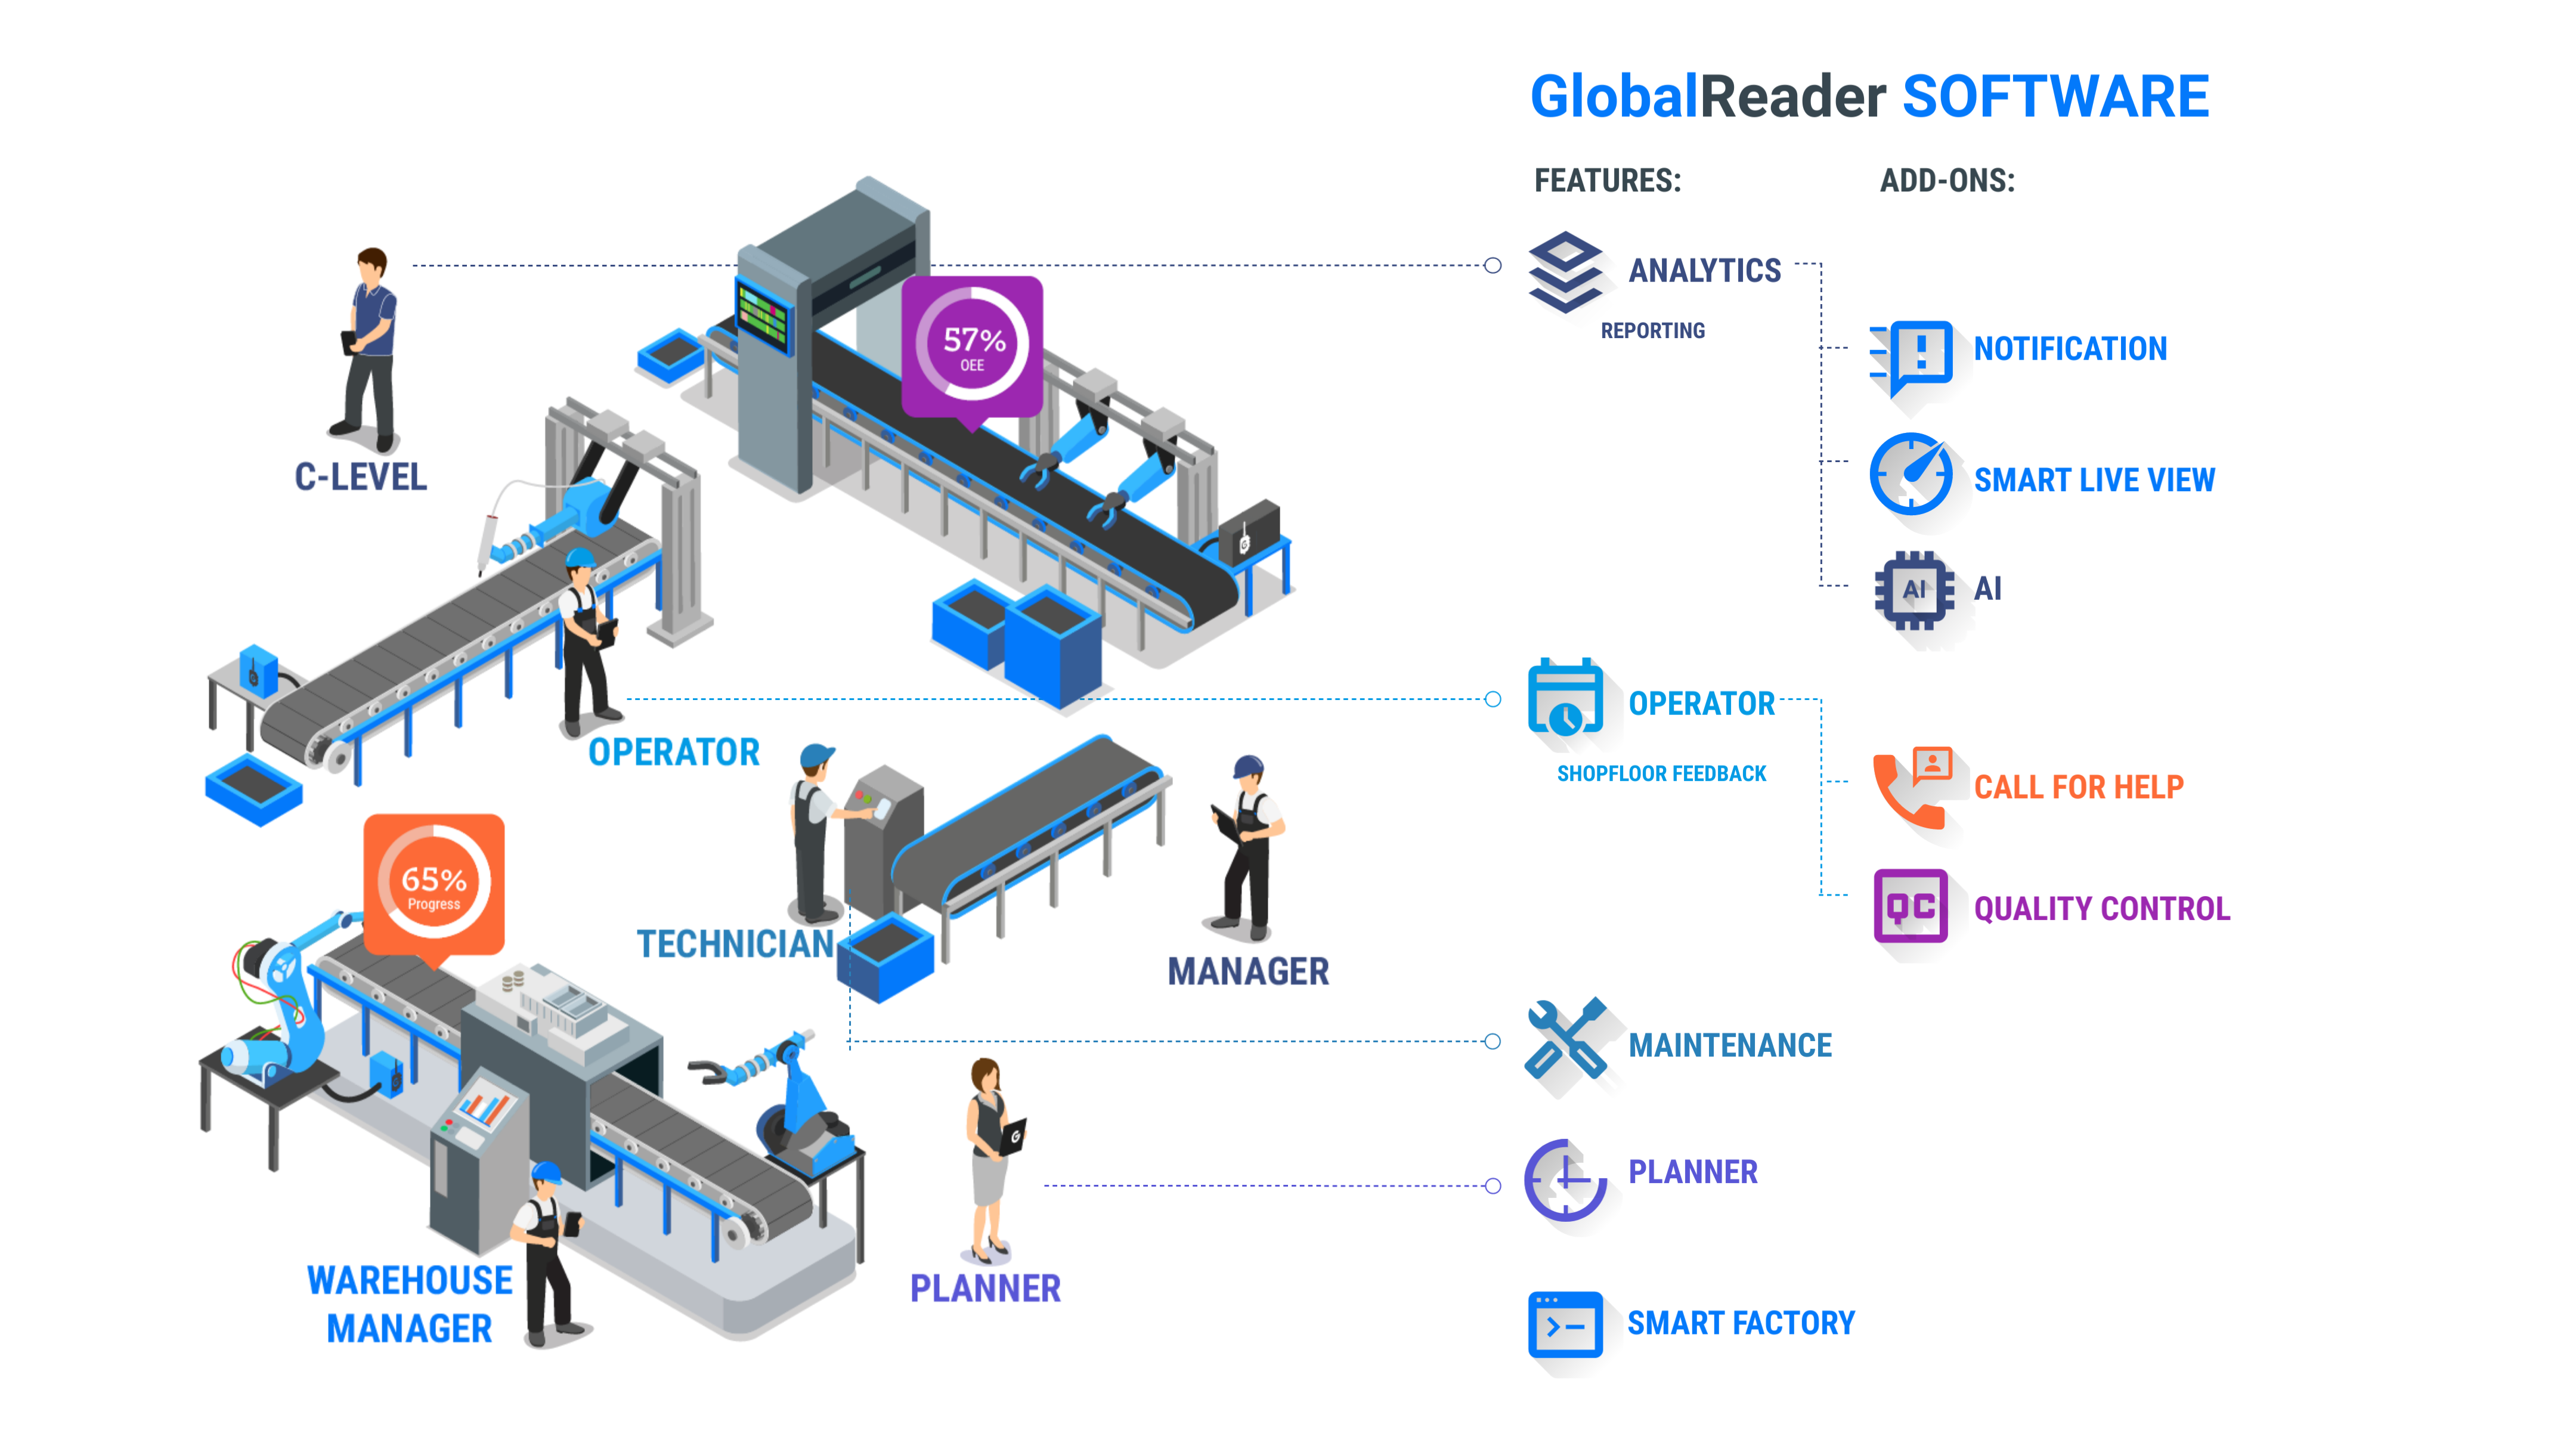 GlobalReader Software